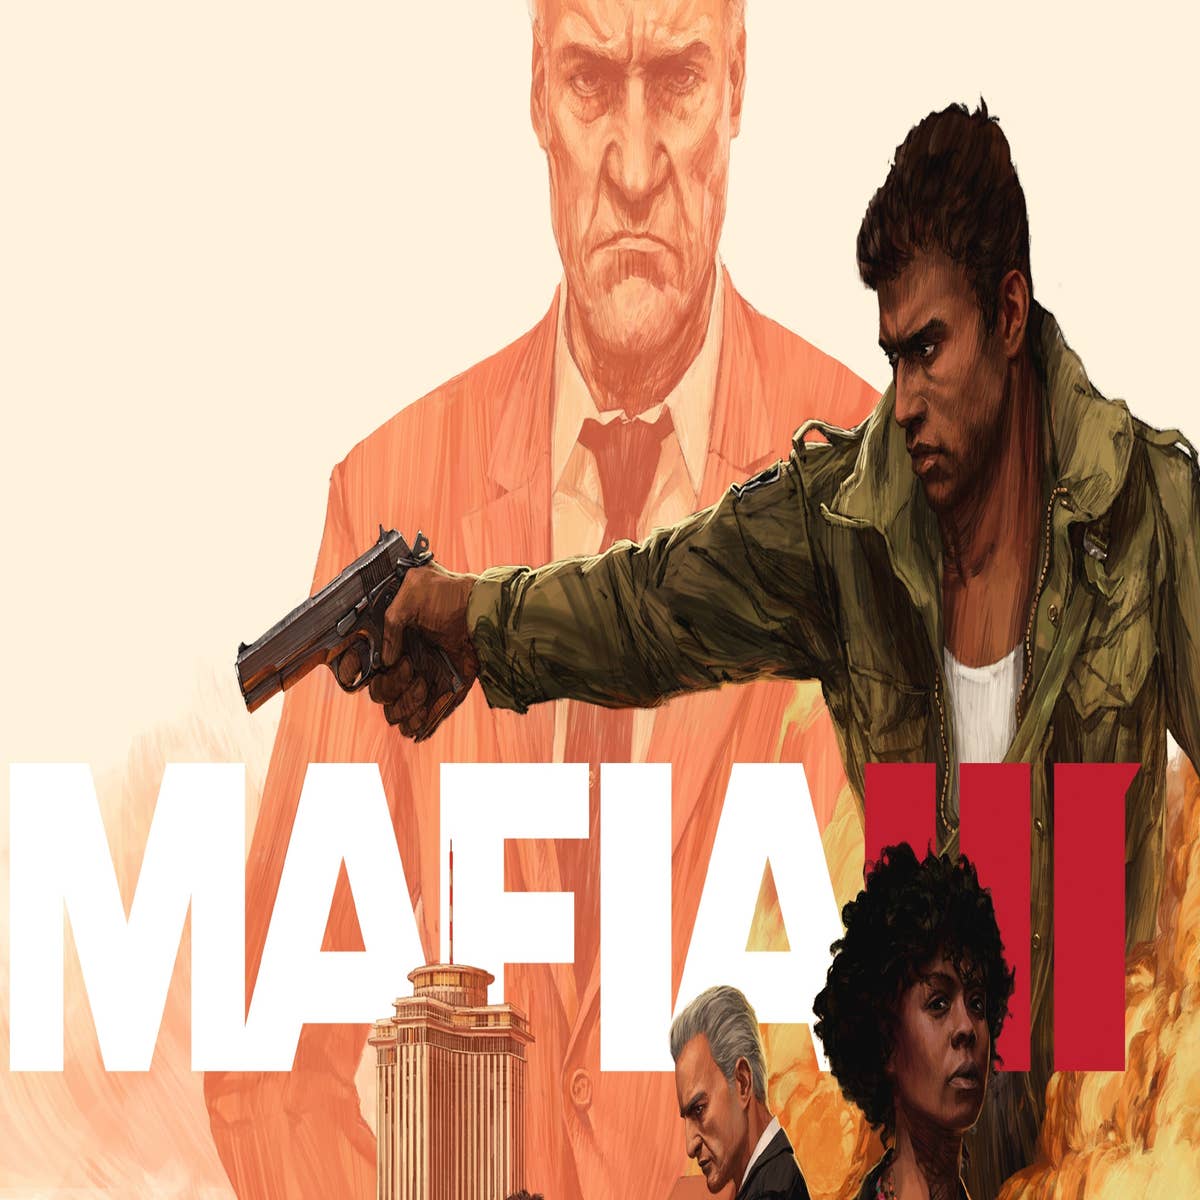 Mafia III: Sign of The Times